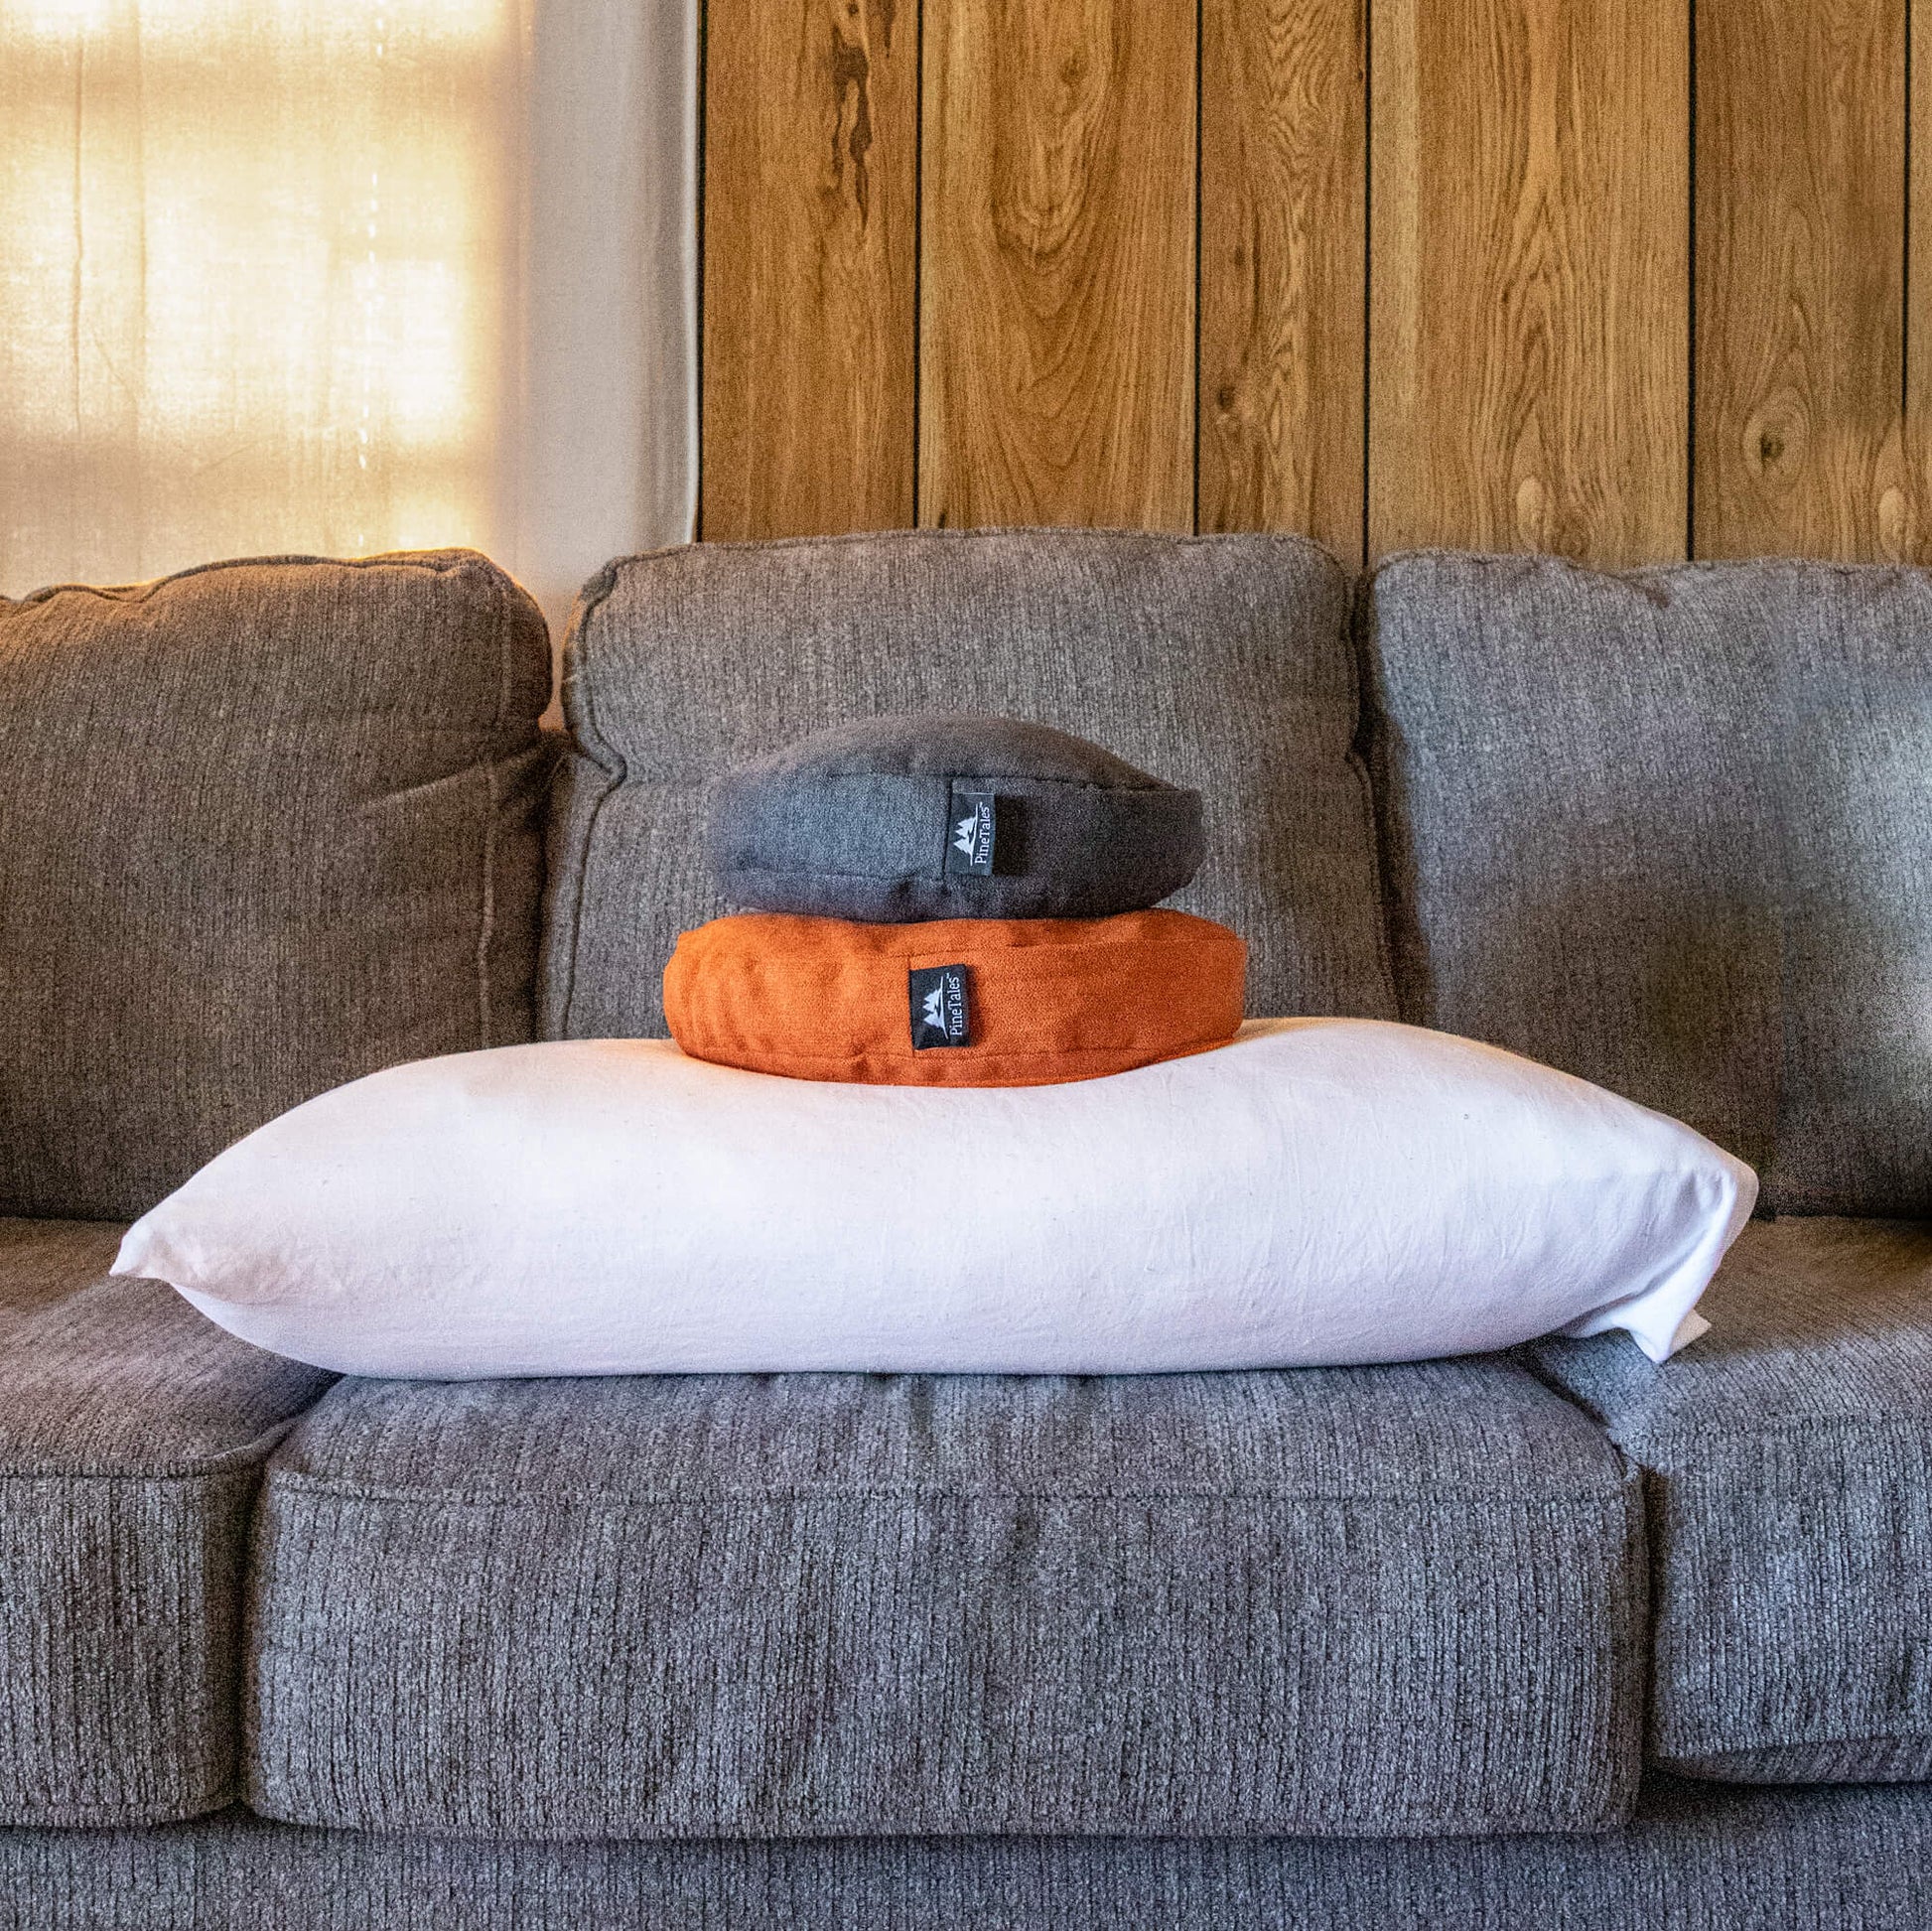 Knee Pillow for Side Sleepers - PineTales - Orange